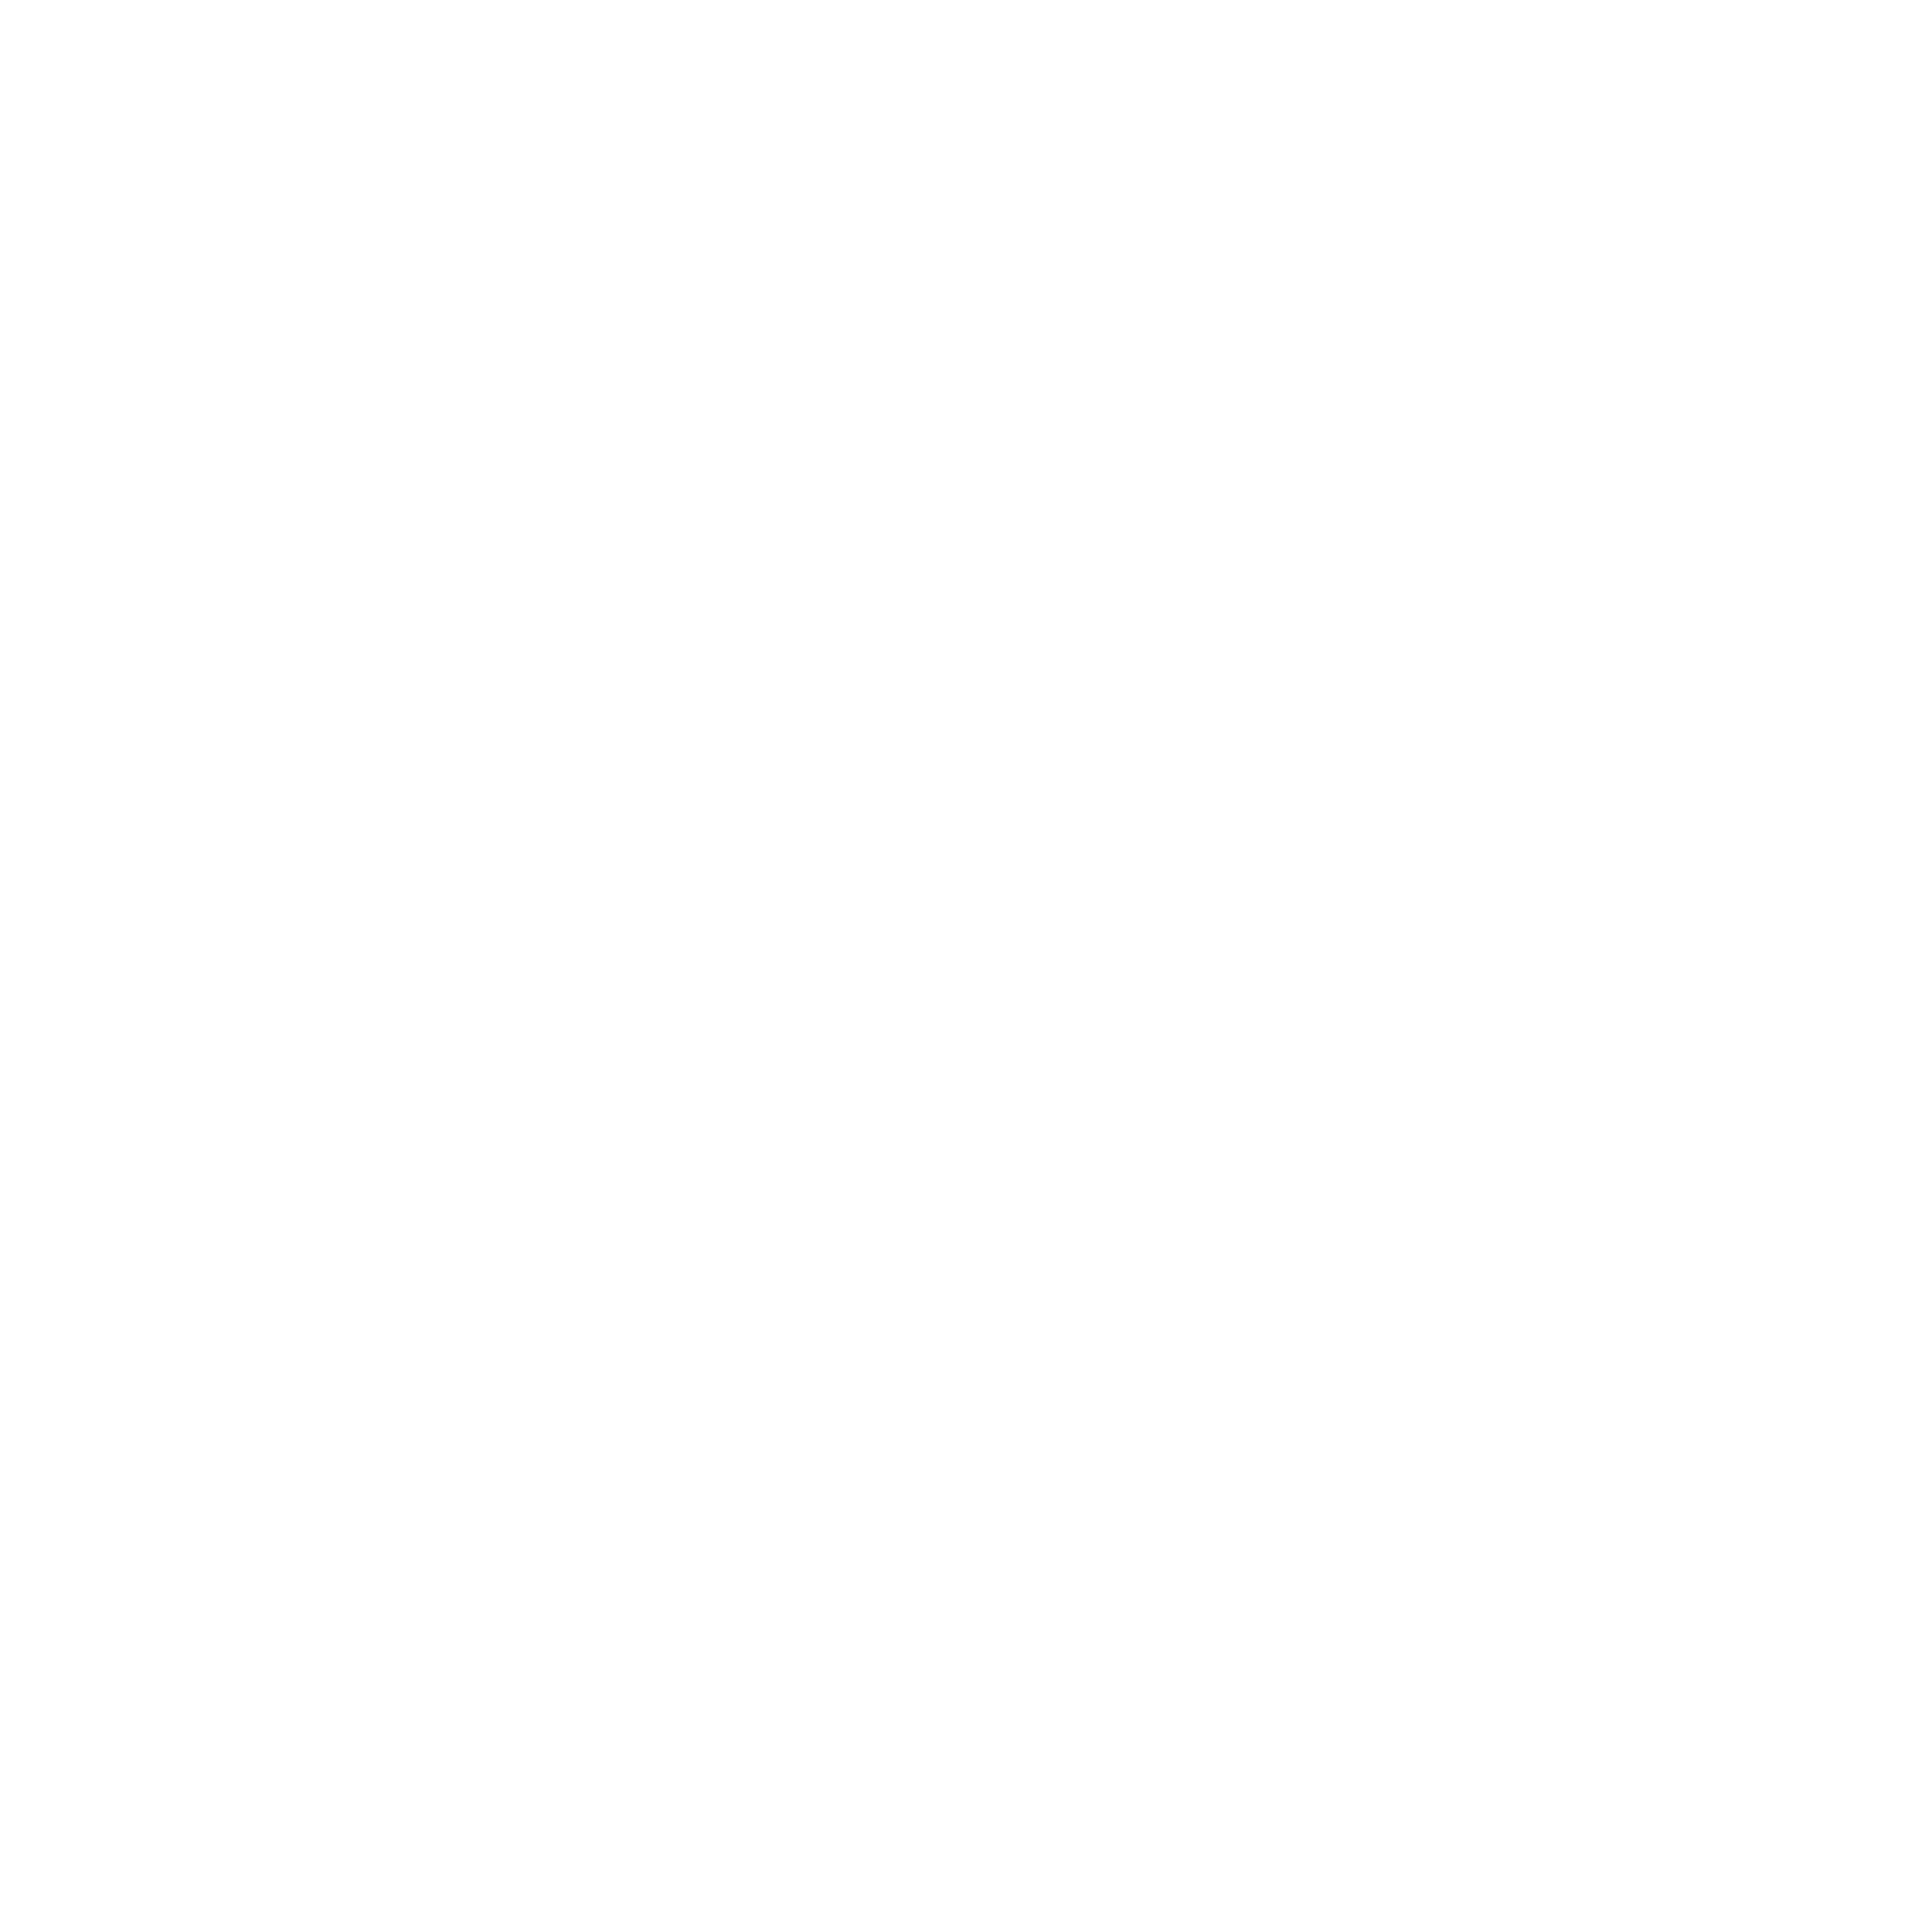 Humania: Season 2